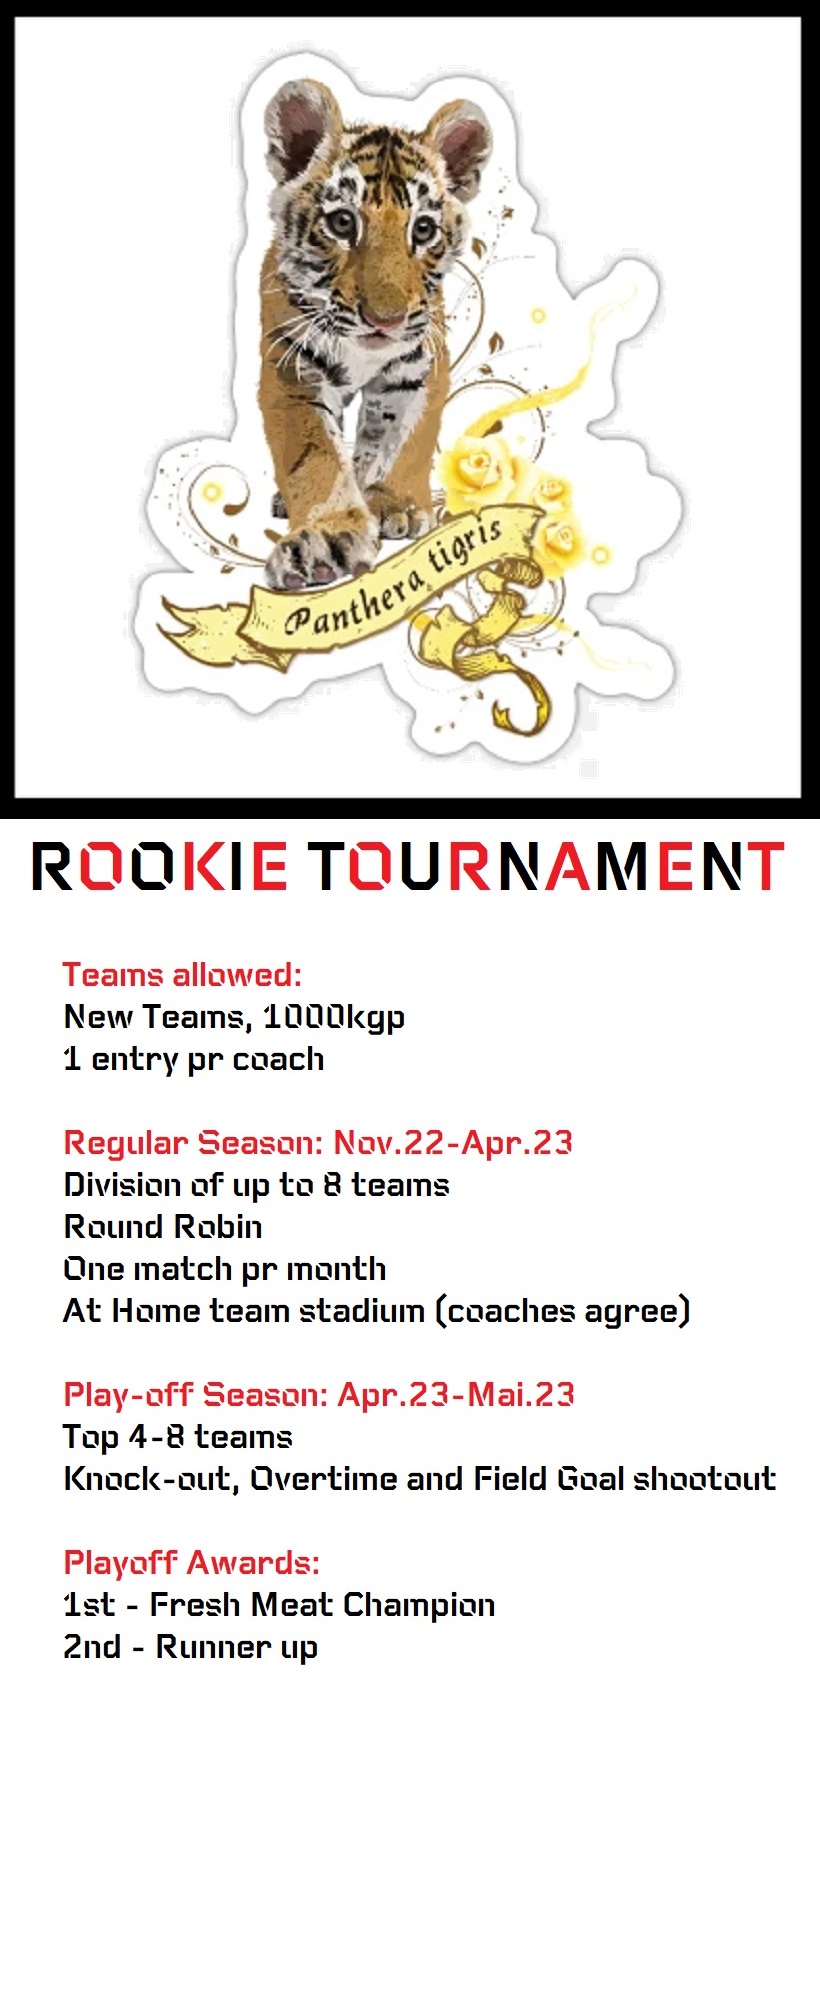 ROOKIE tournament